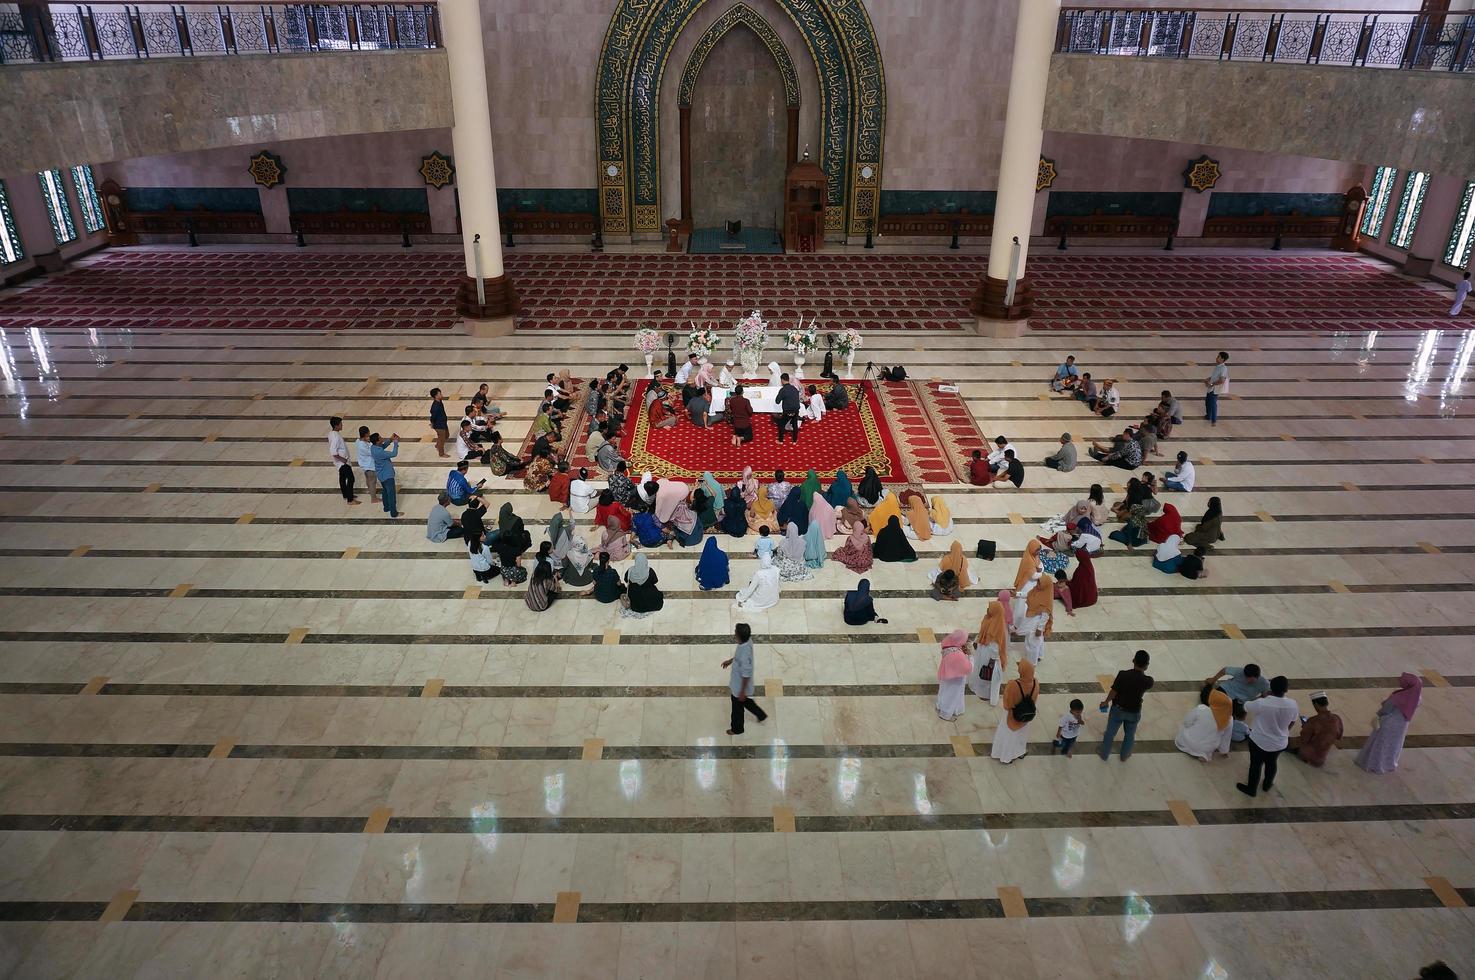 sangatta, kalimantan oriental, indonésia, 2020 - contrato de casamento islâmico na mesquita al faruq. um contrato de casamento islâmico é um acordo pré-nupcial islâmico. foto